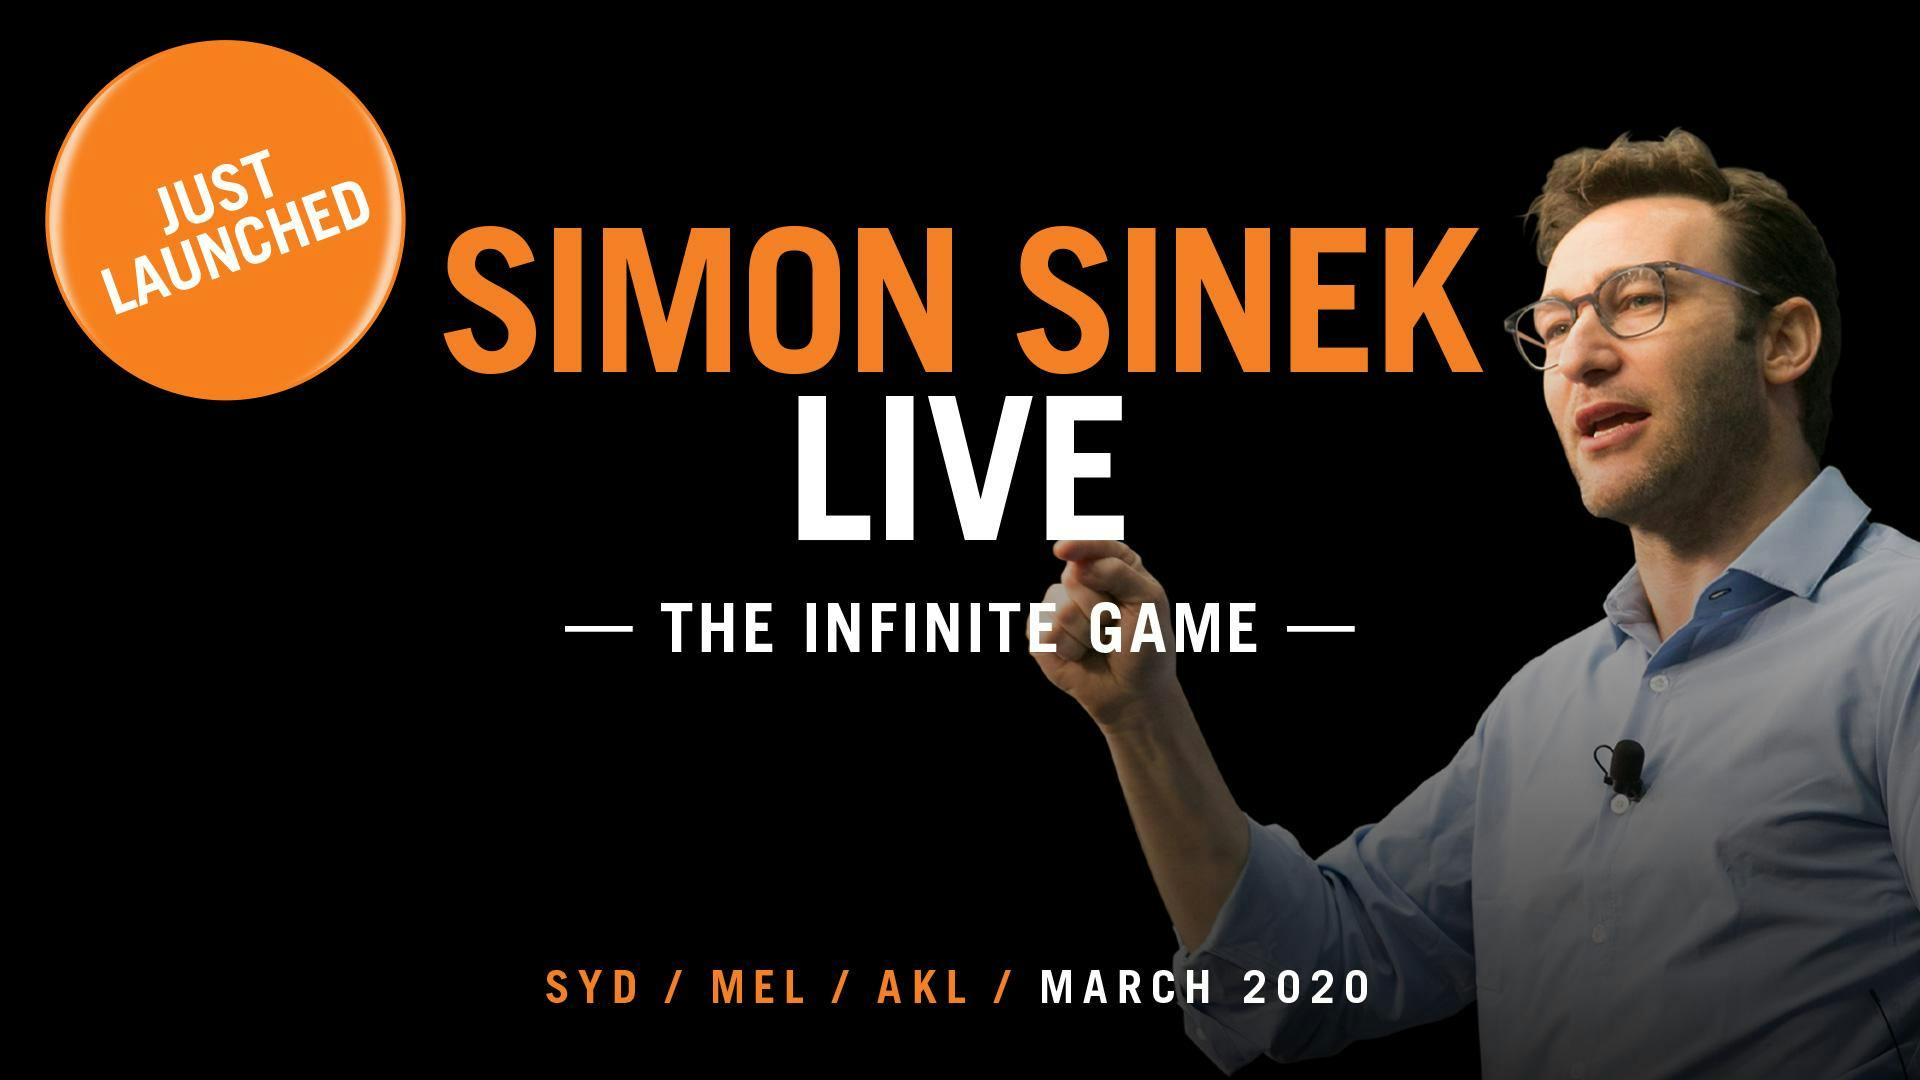 Simon Sinek LIVE (Auckland)